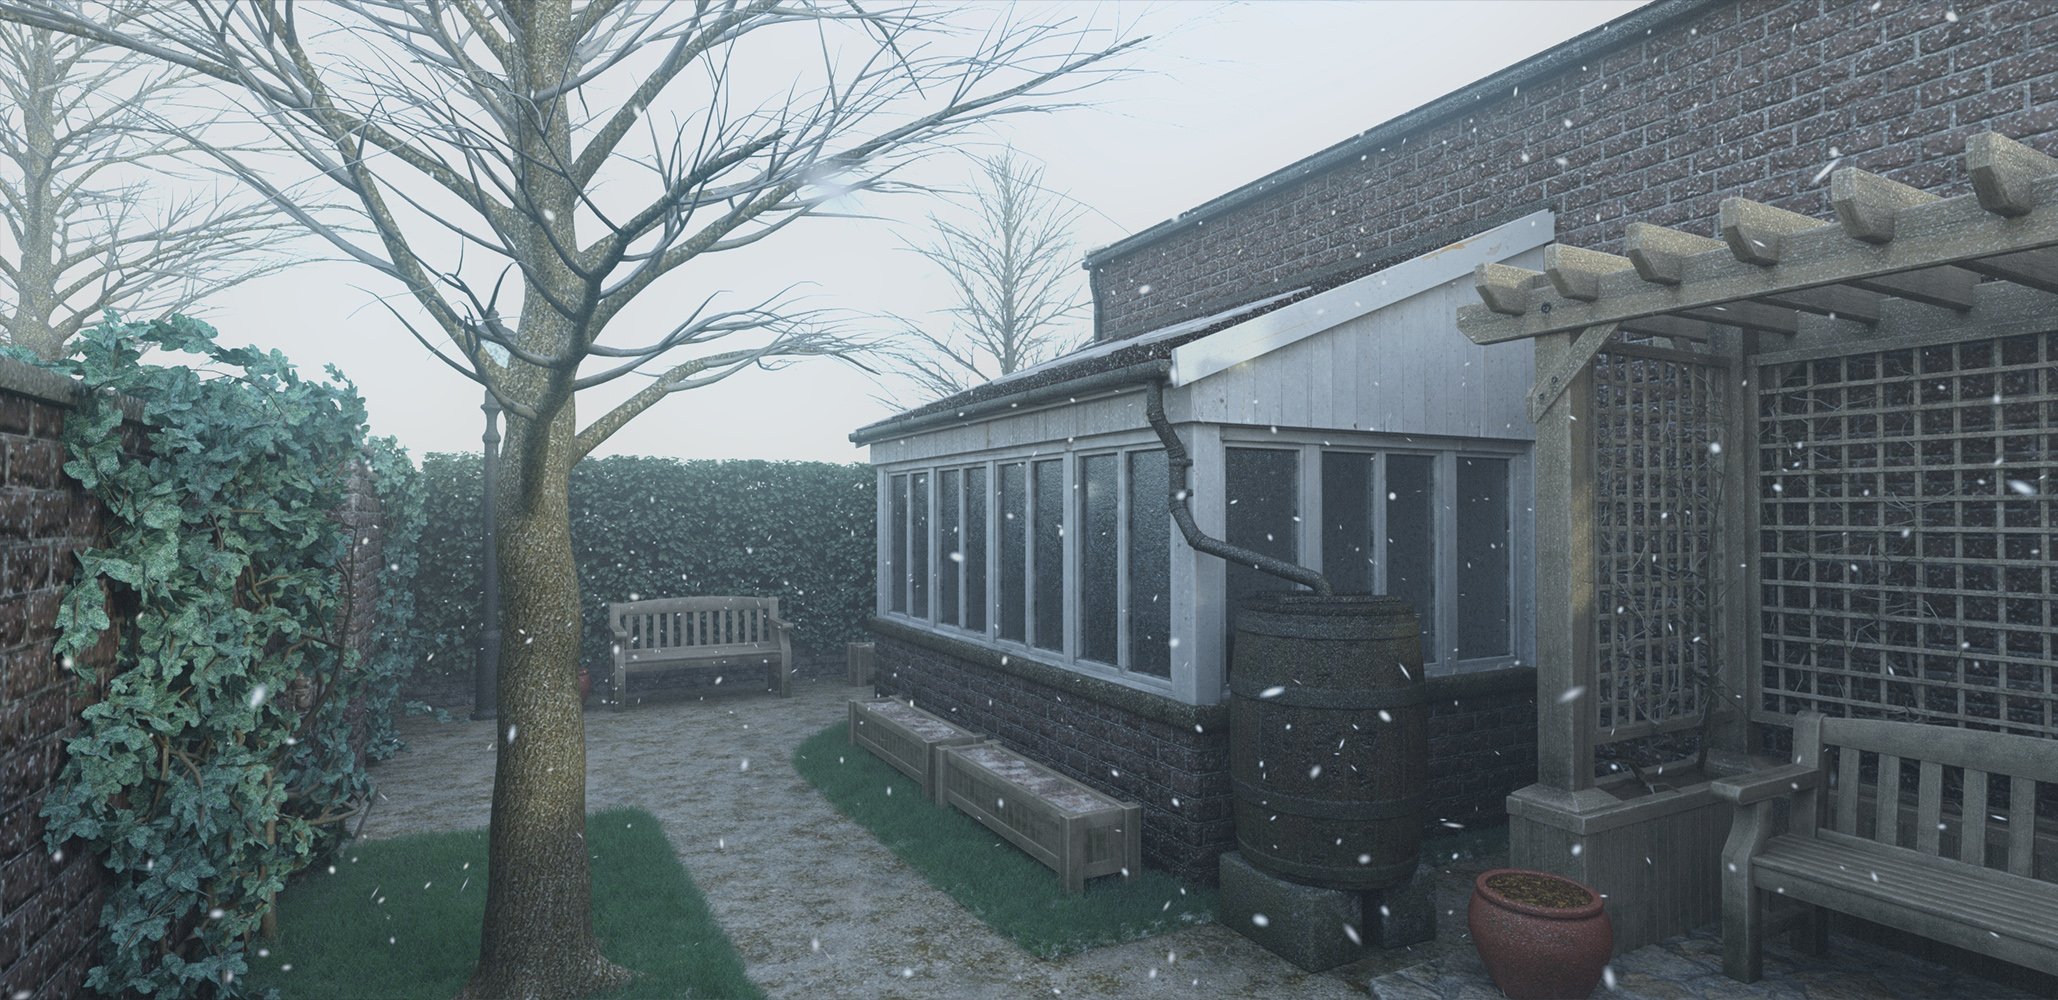 Enclosed Side Garden Winter Add-On by: Predatron, 3D Models by Daz 3D